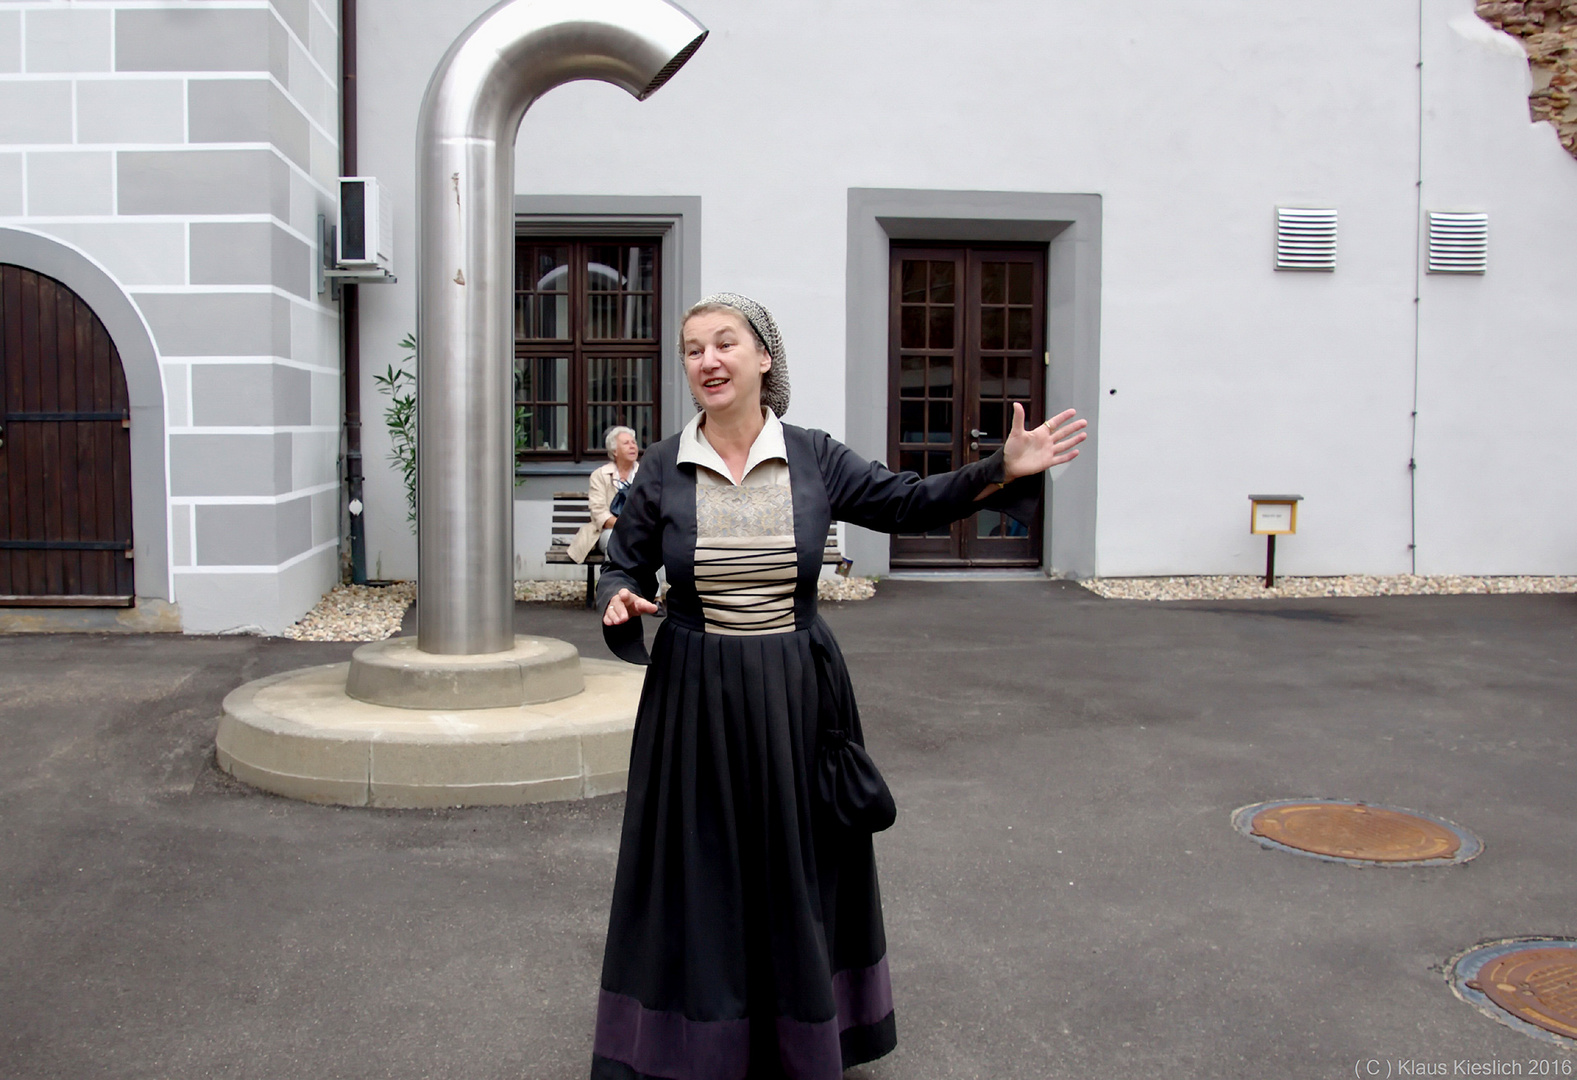 Stadtführerin in Torgau als Luthers Ehefrau Katharina